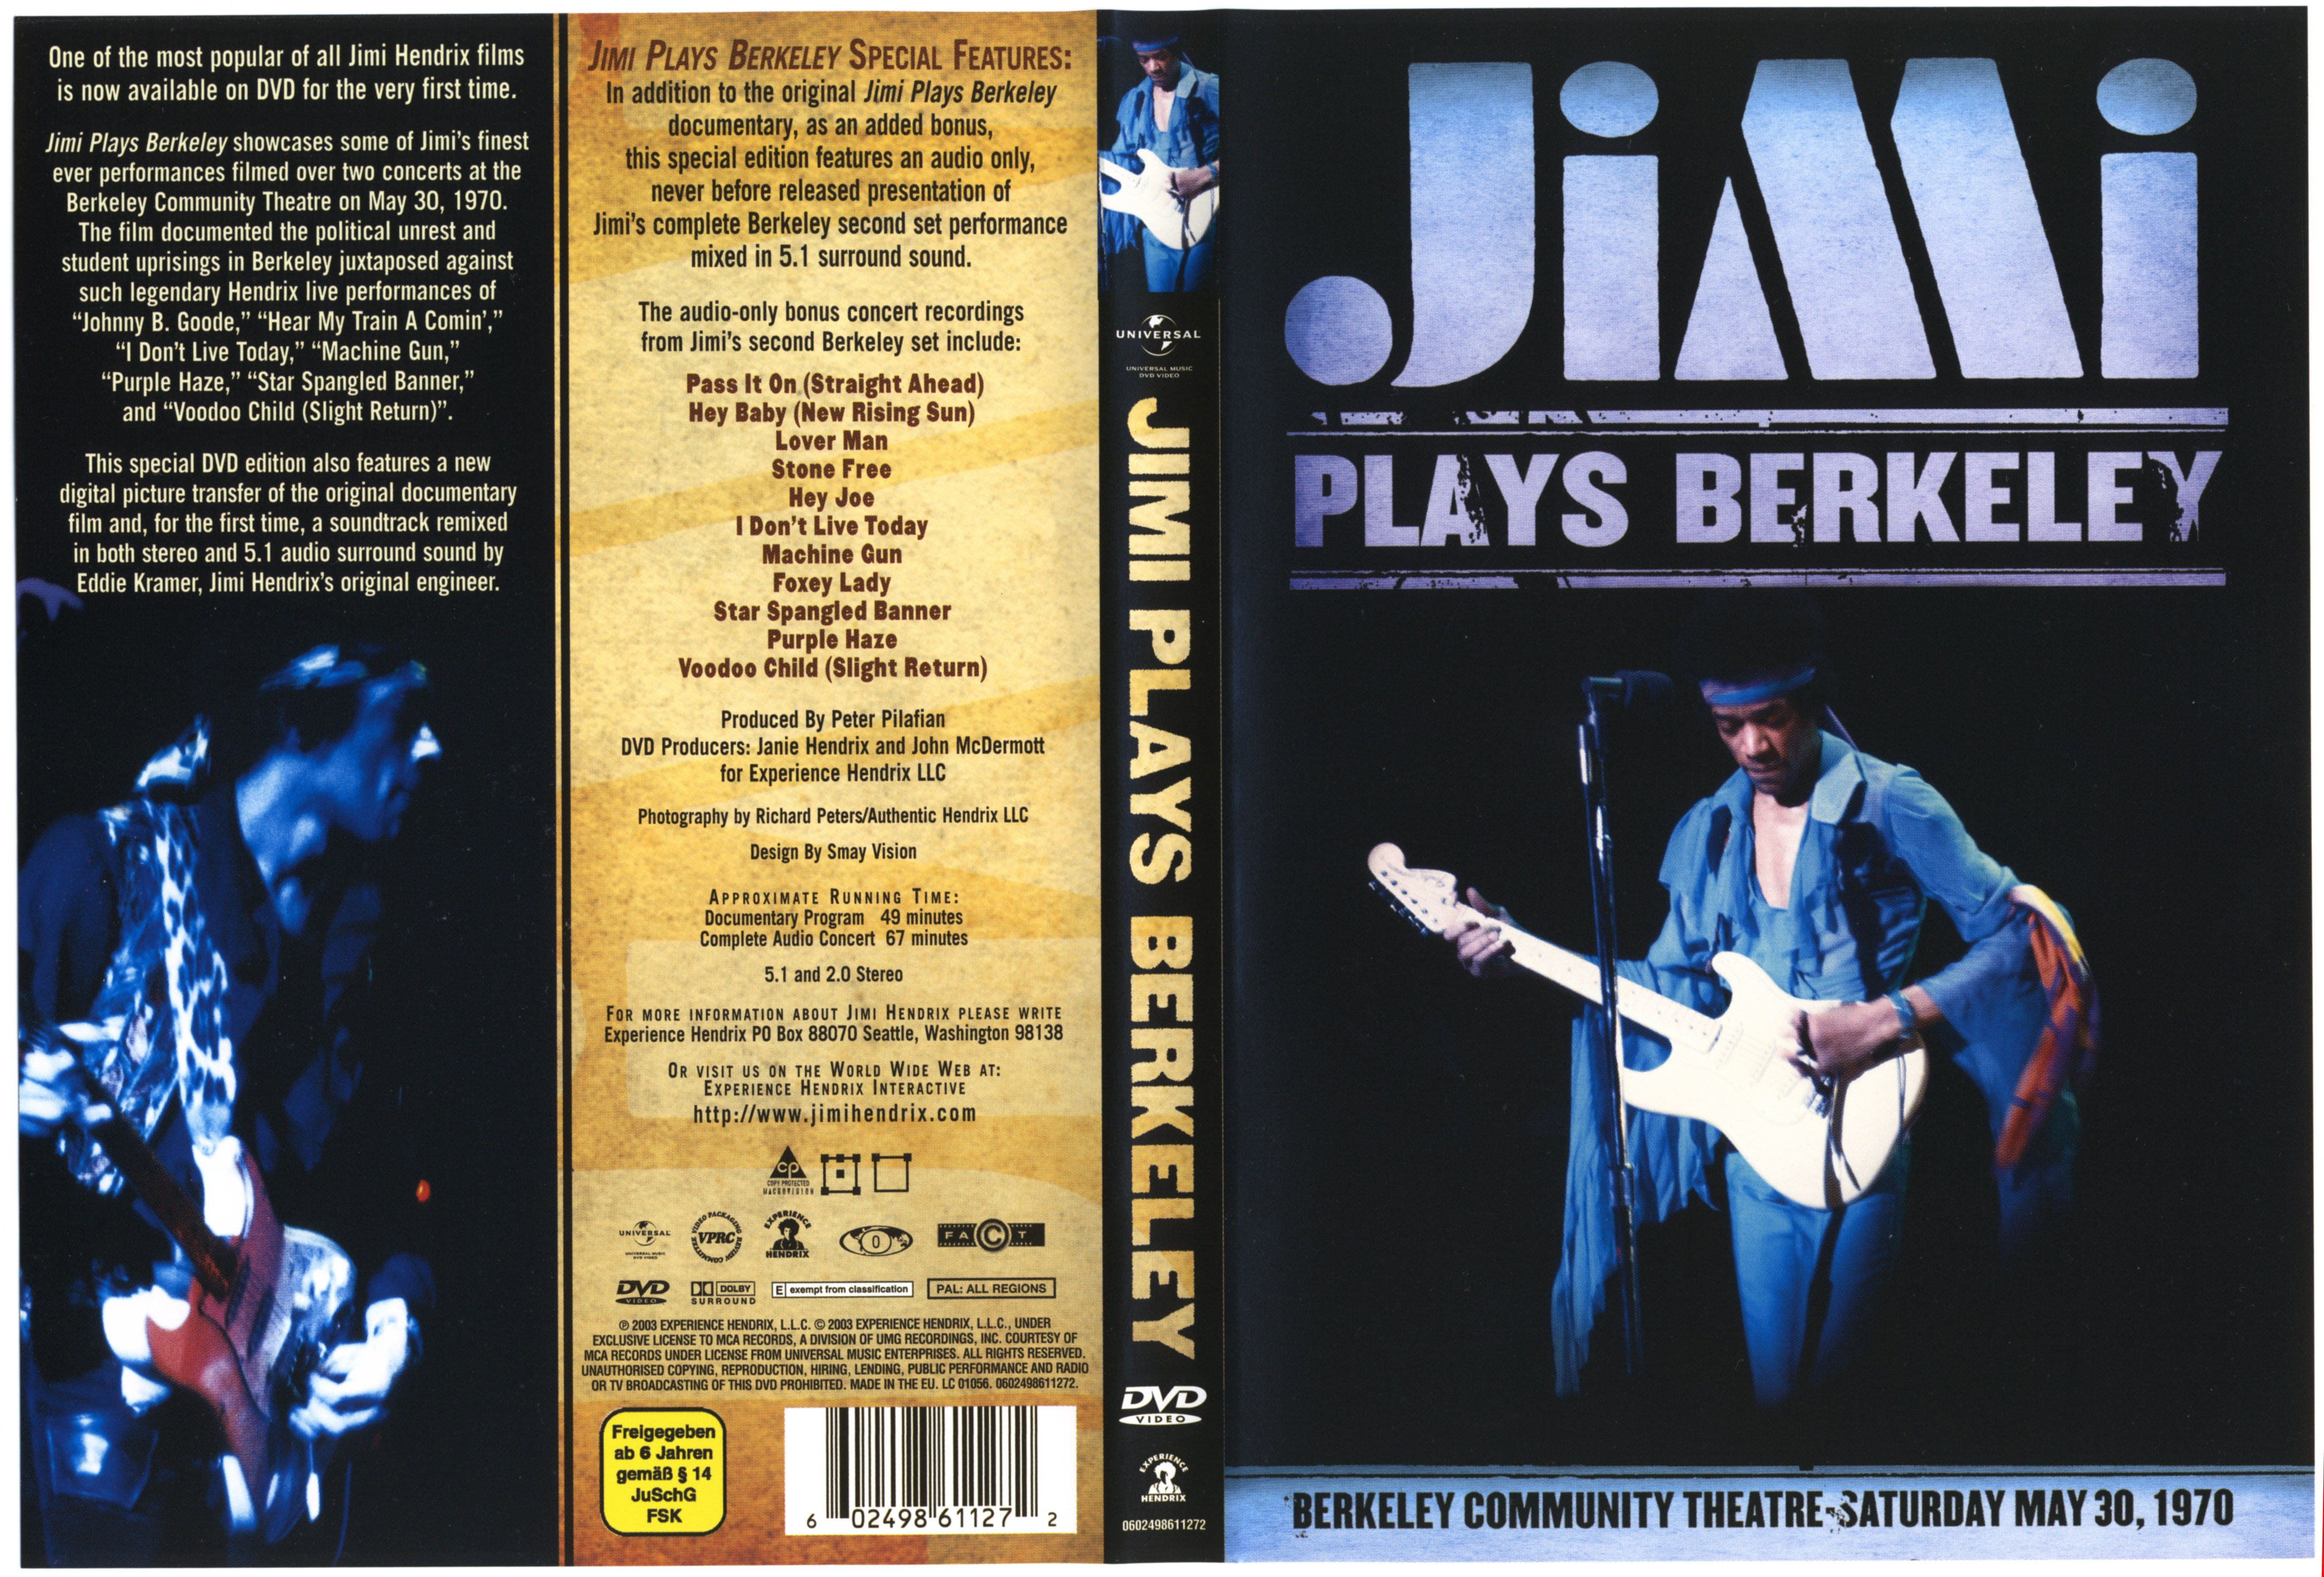 Jaquette DVD Jimi Plays Berkeley